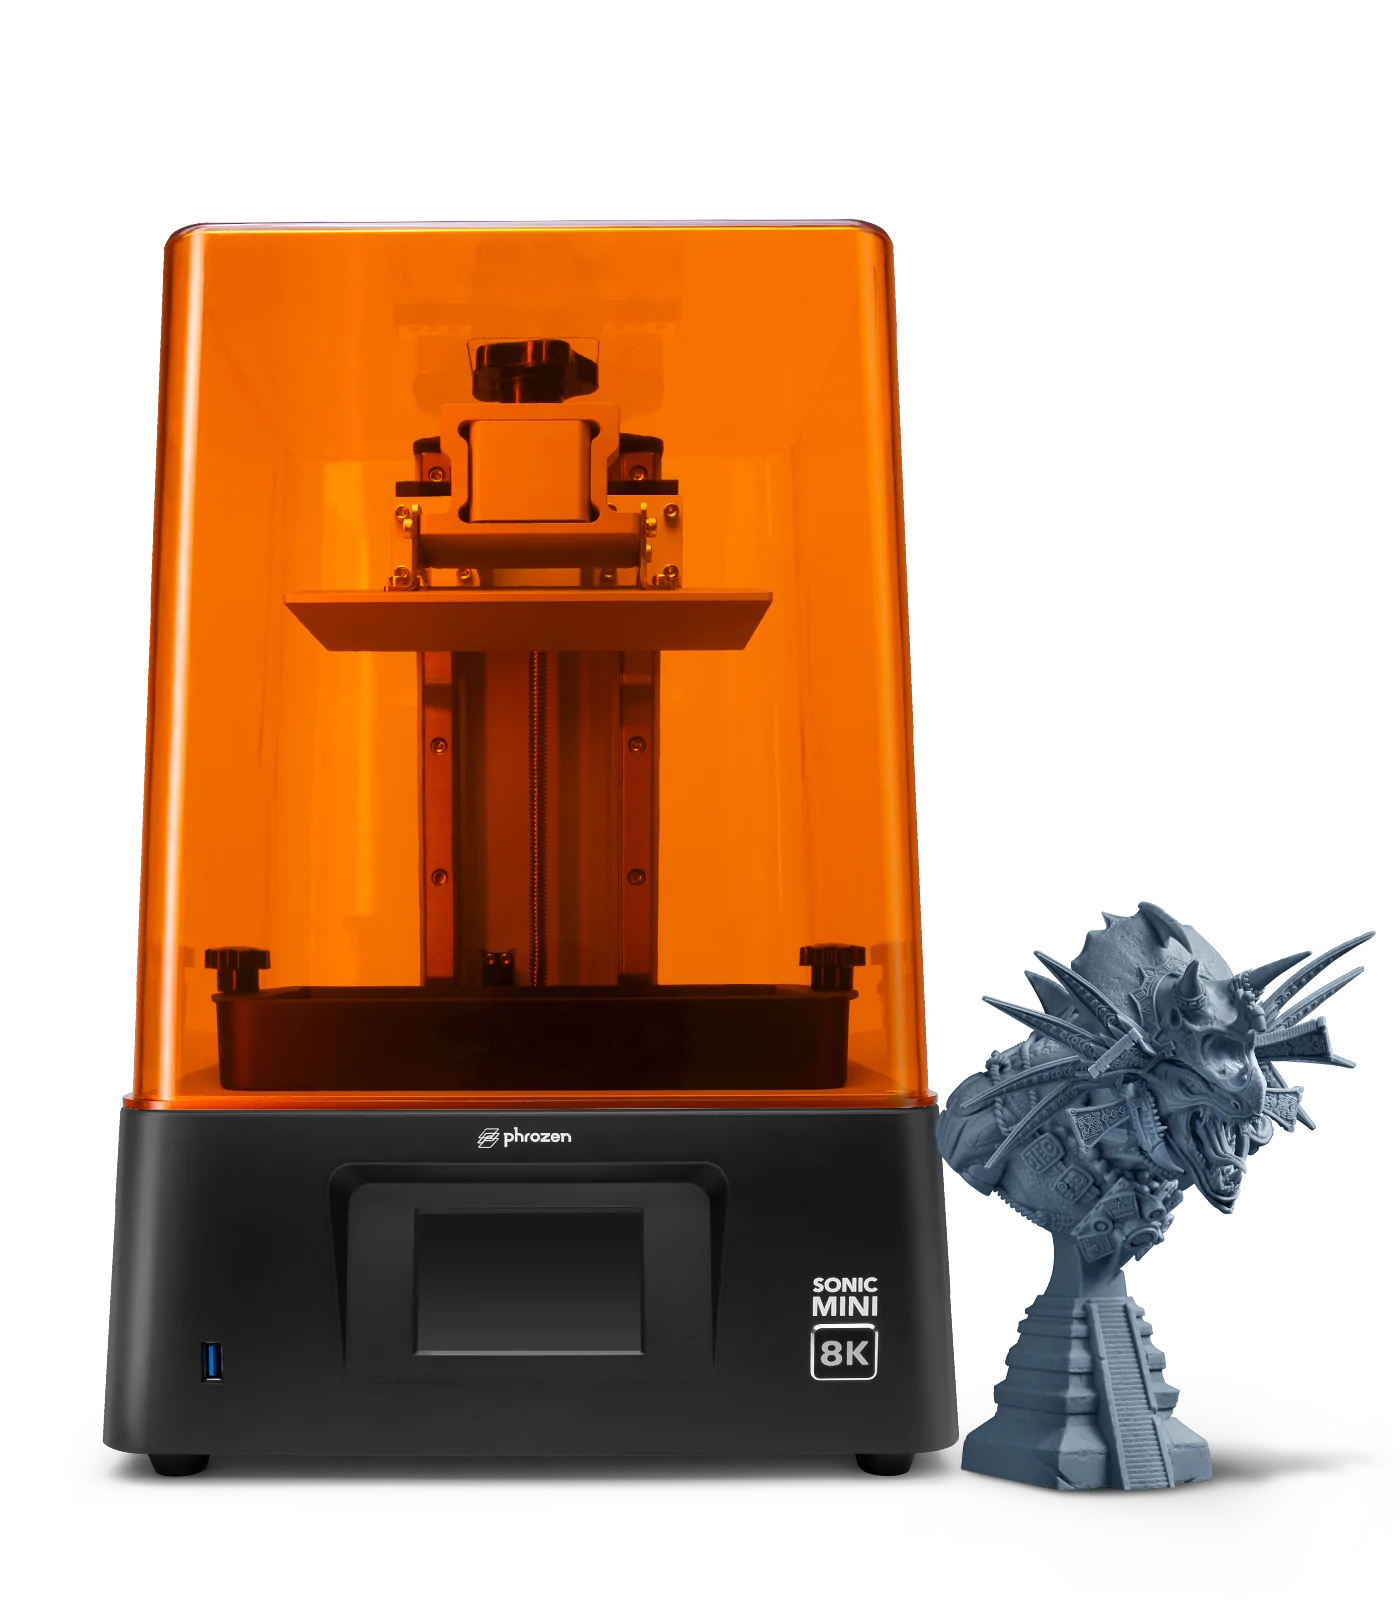 Phrozen Sonic Mini 8K 3D Printer details